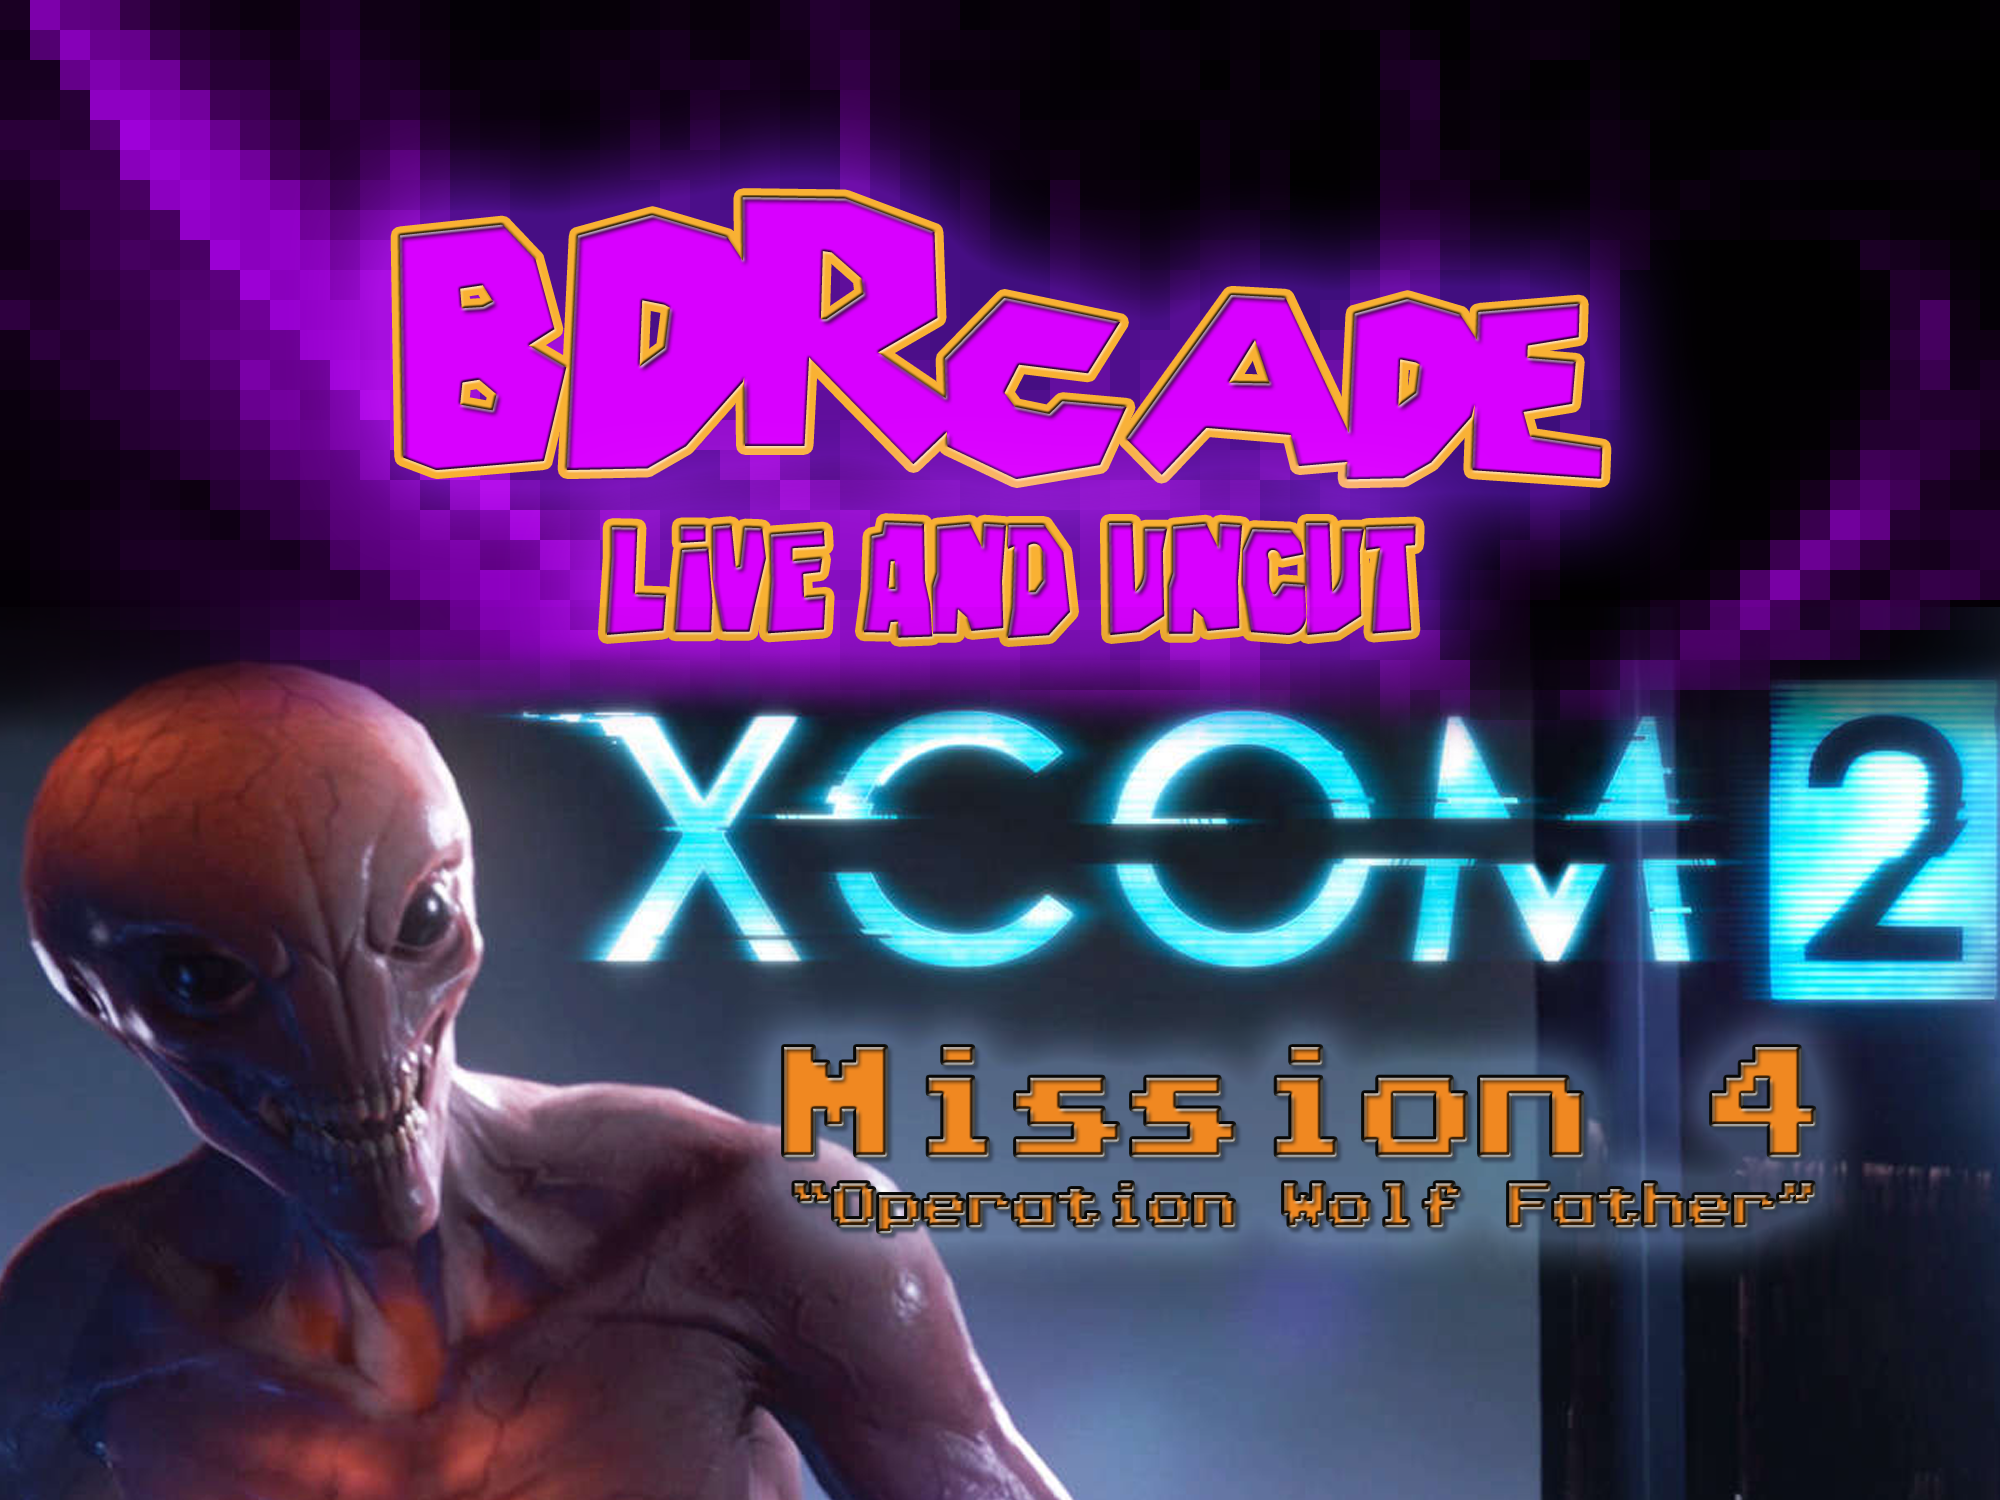 XCOM 2 – Mission 4: “Operation Wolf Father”- A BDRcade Live Stream